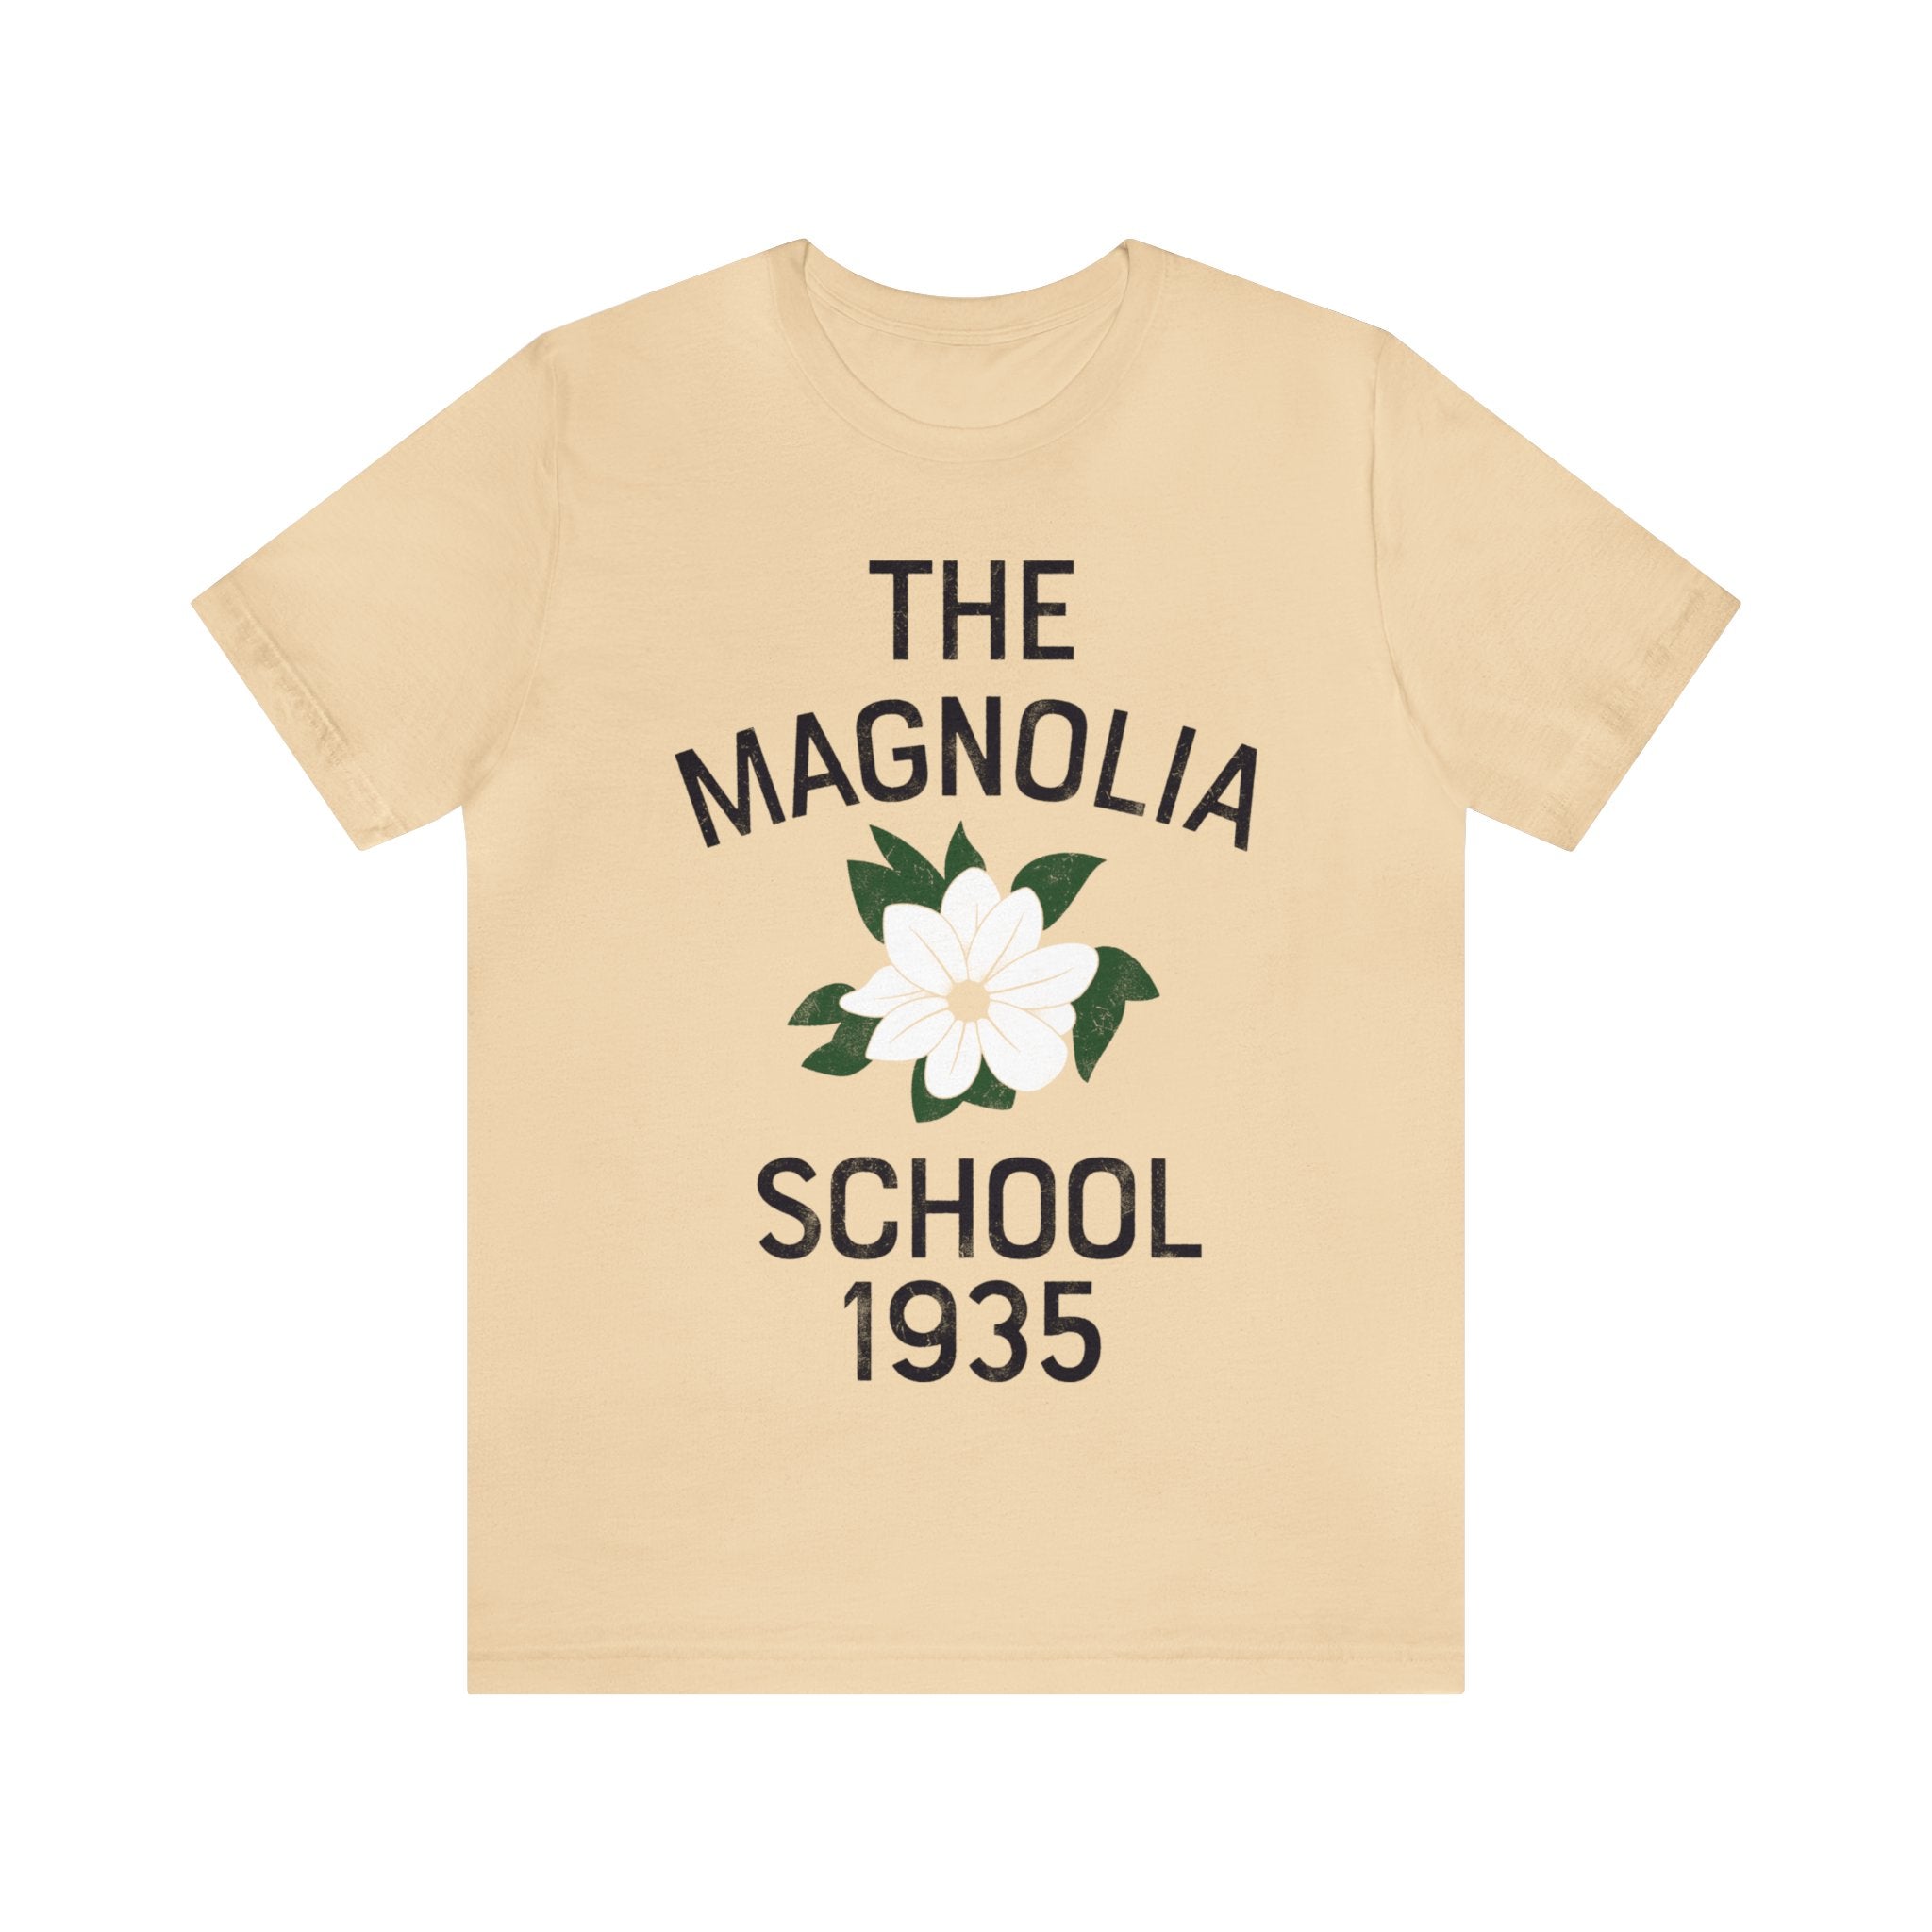 The Magnolia School - Dirty Coast Press